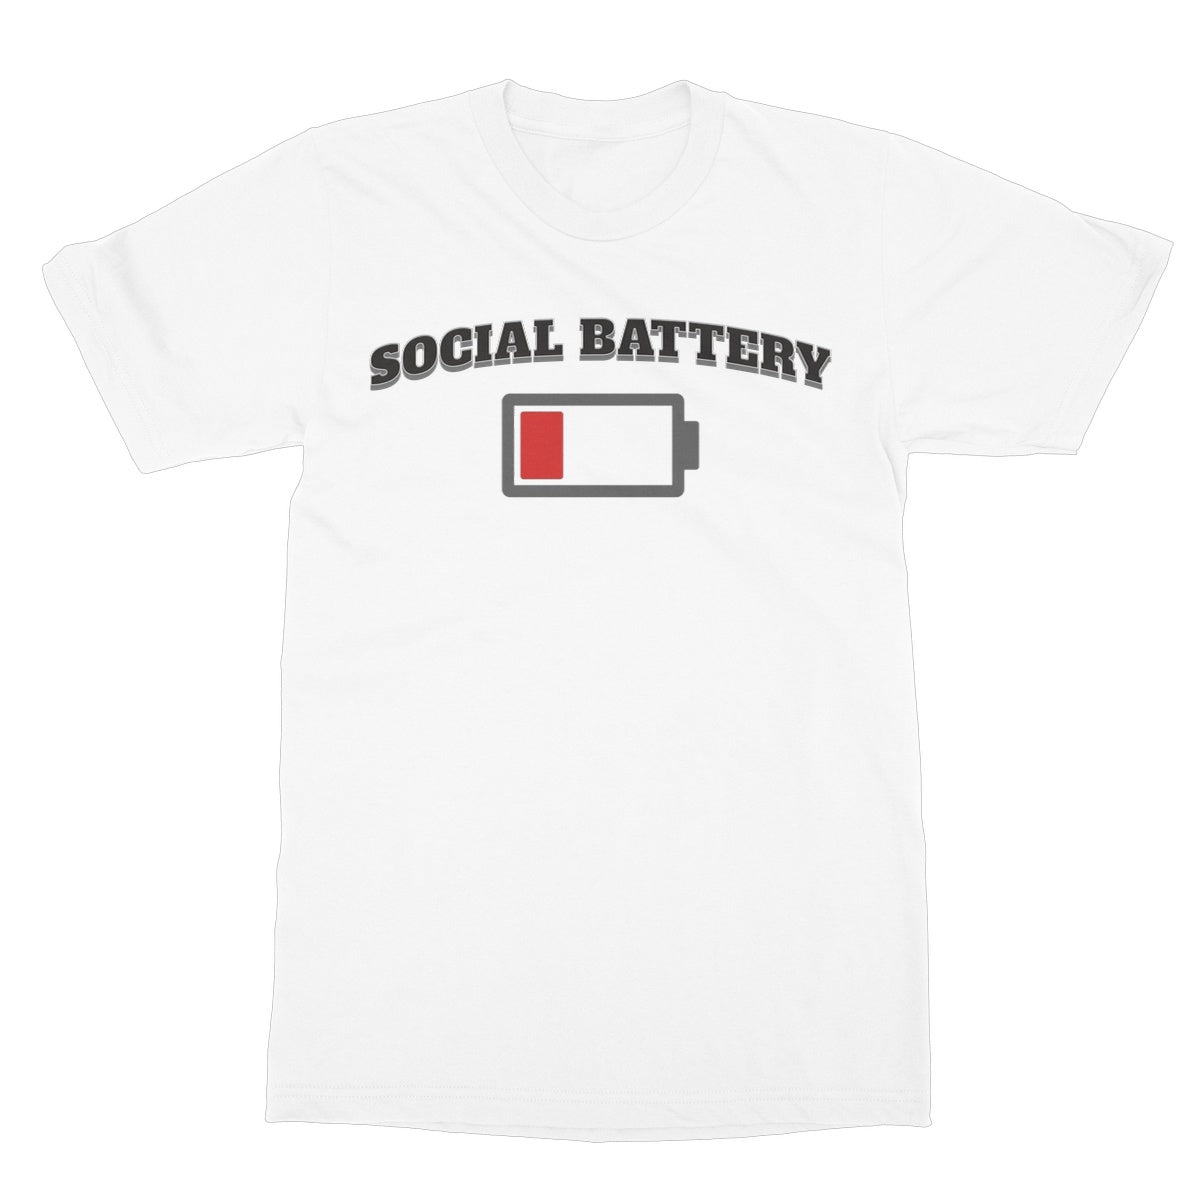 low social battery t shirt white